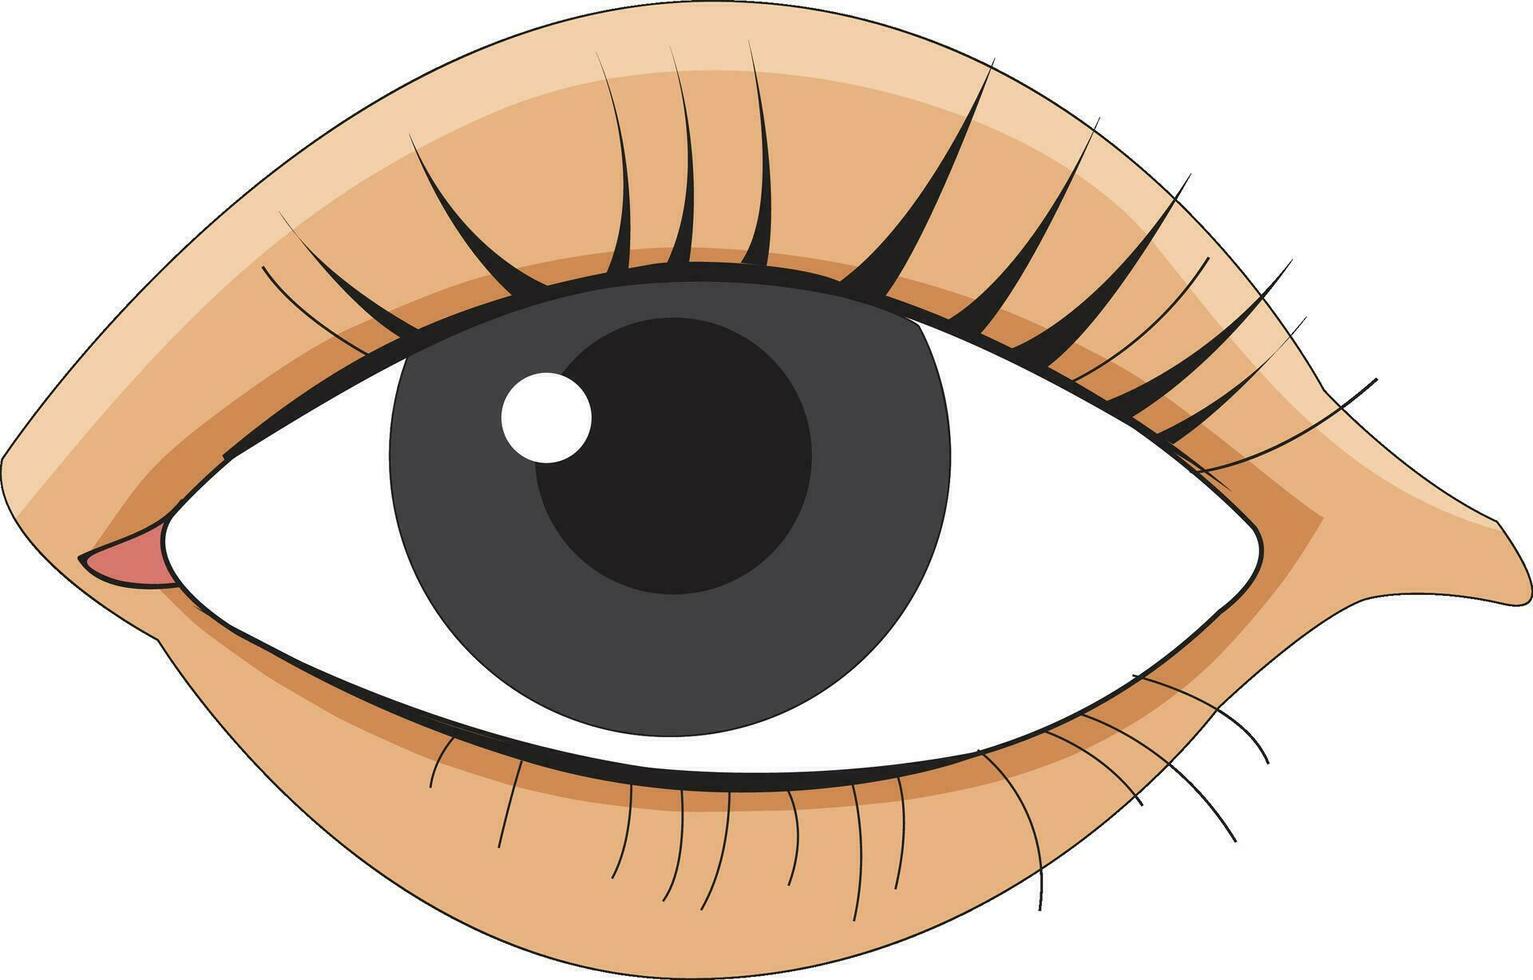 Human eye illustration vector